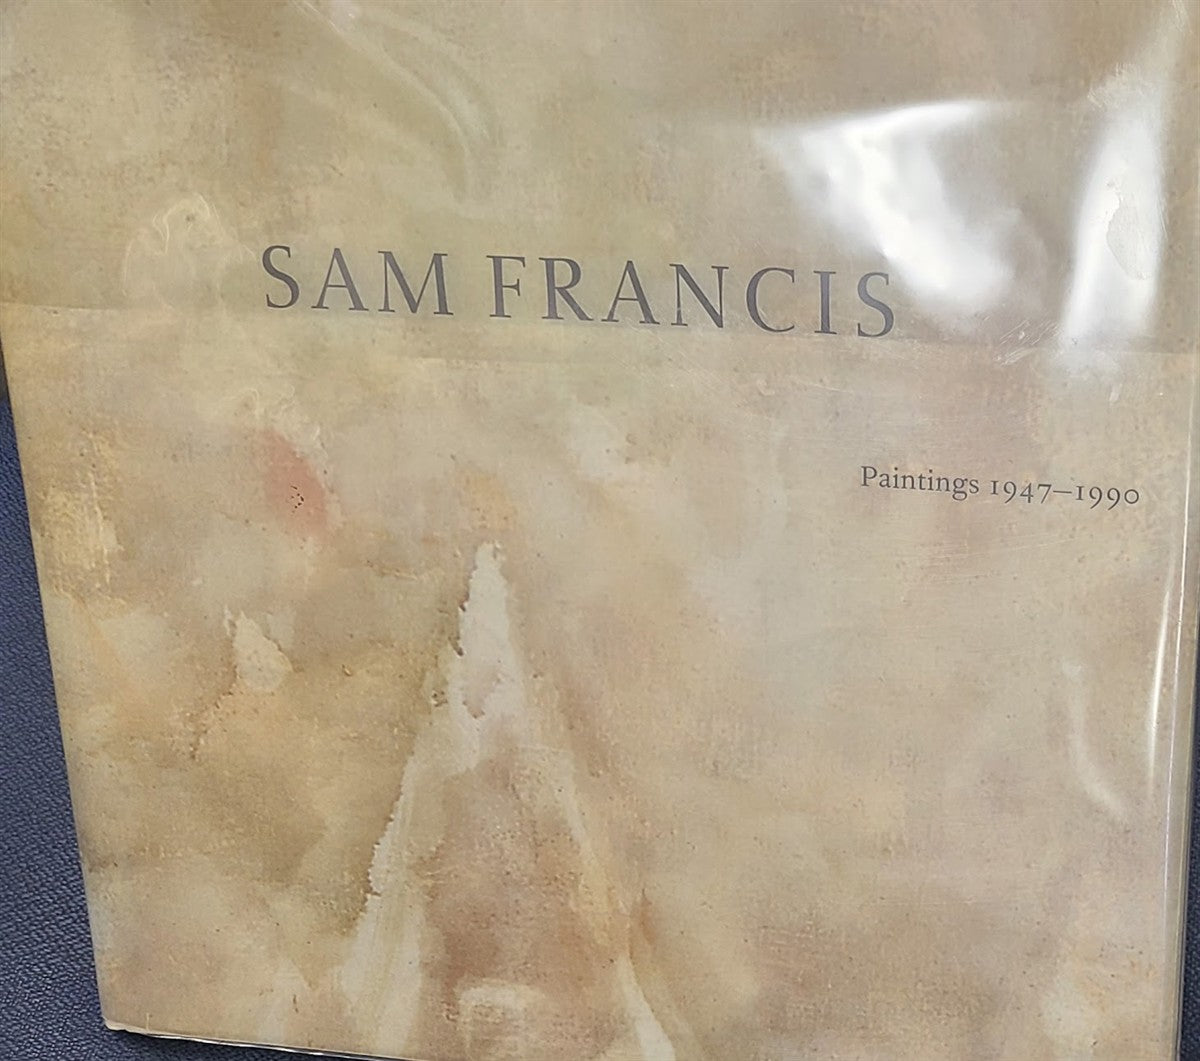 SAM FRANCIS, PAINTINGS 1947-1990